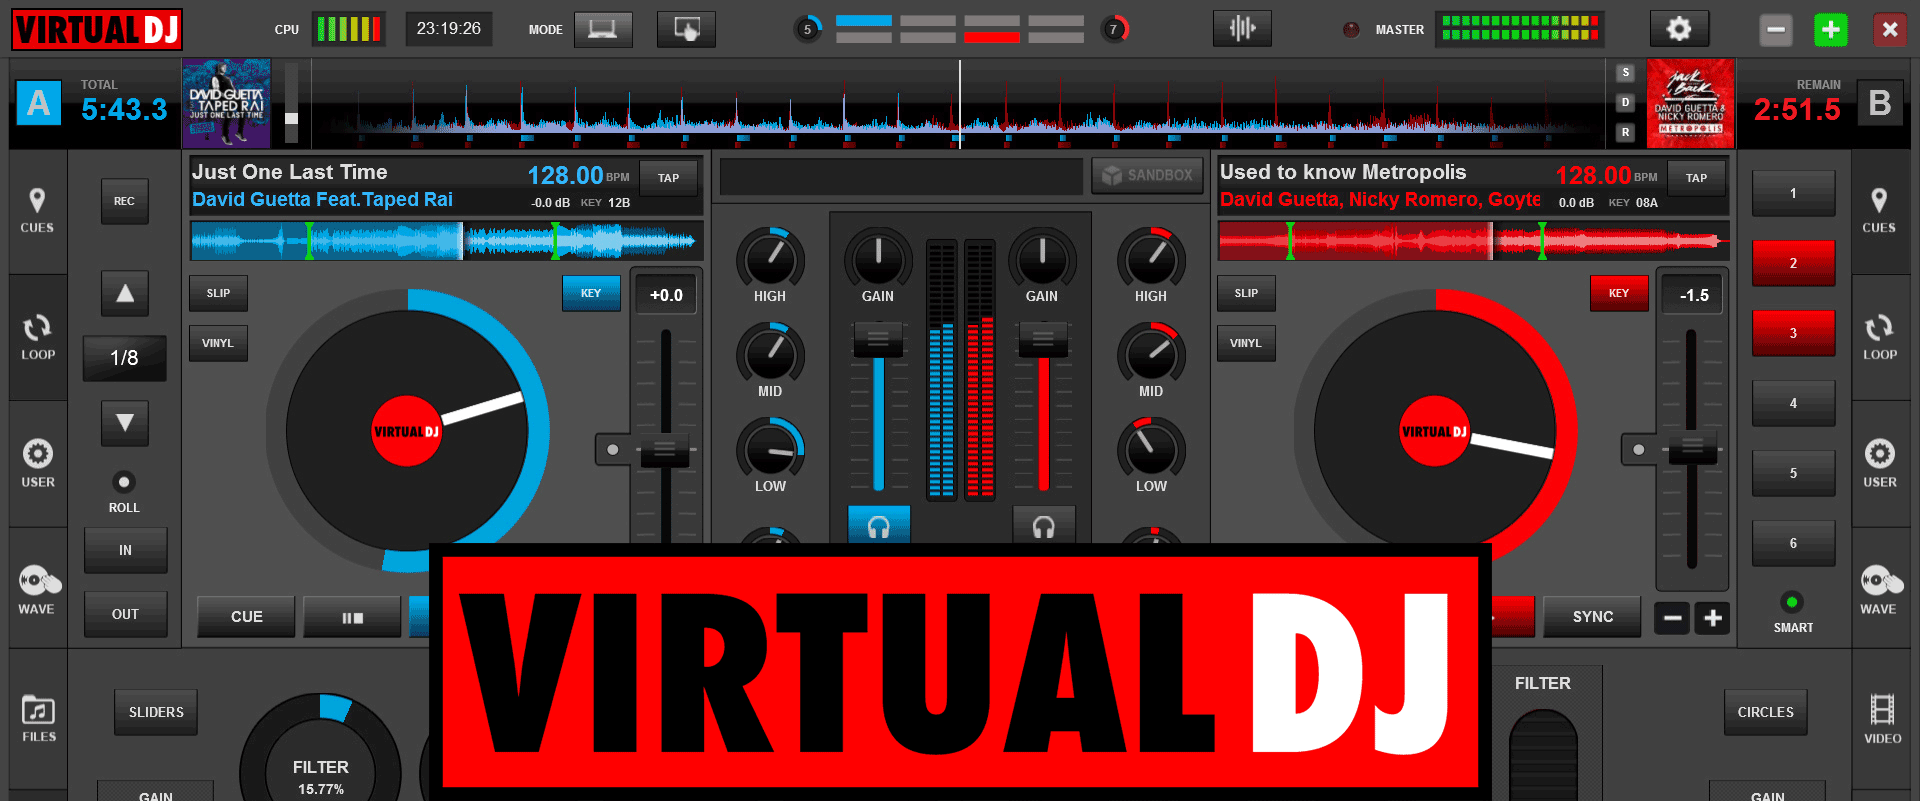 Virtual dj scratch download